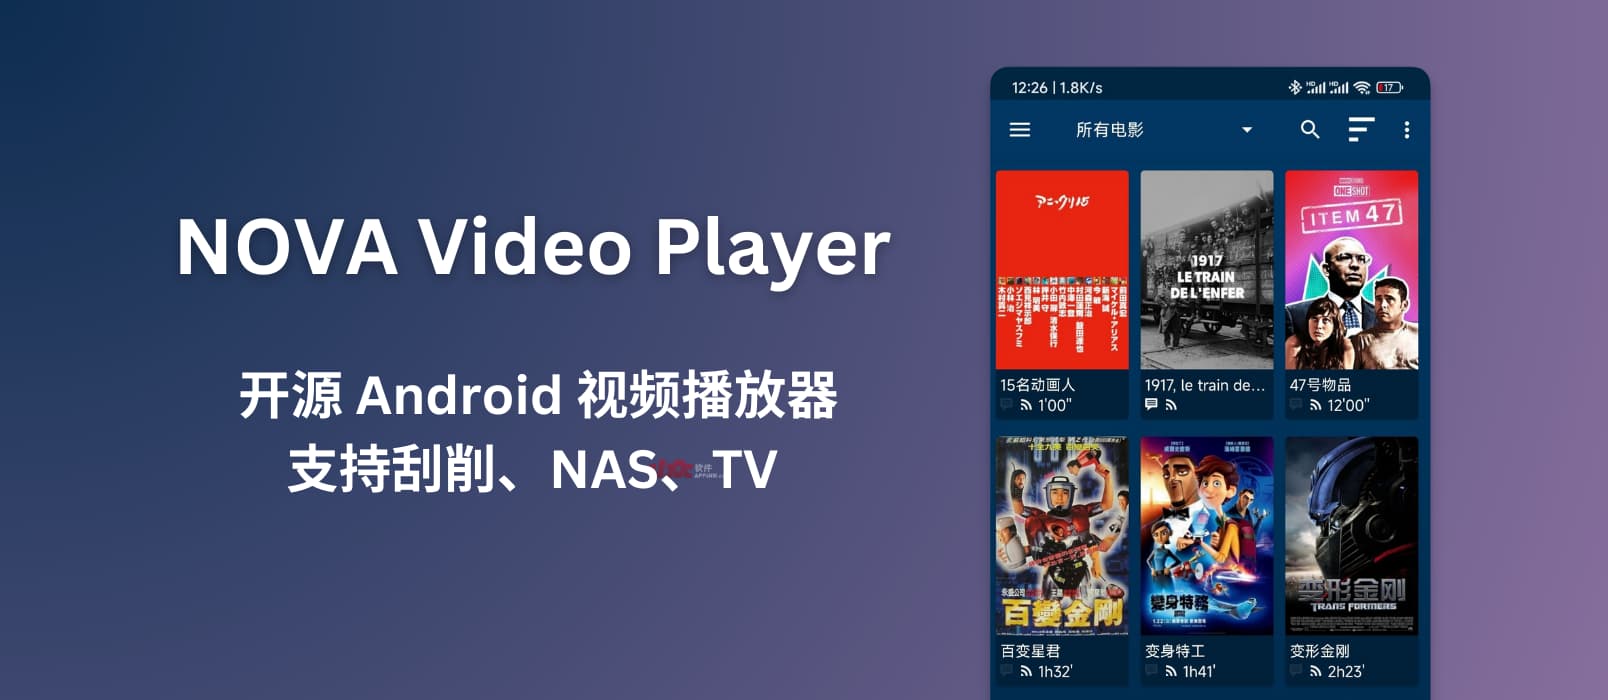 NOVA Video Player - 开源 Android 视频播放器，支持手机、平板、电视，支持刮削、NAS 等